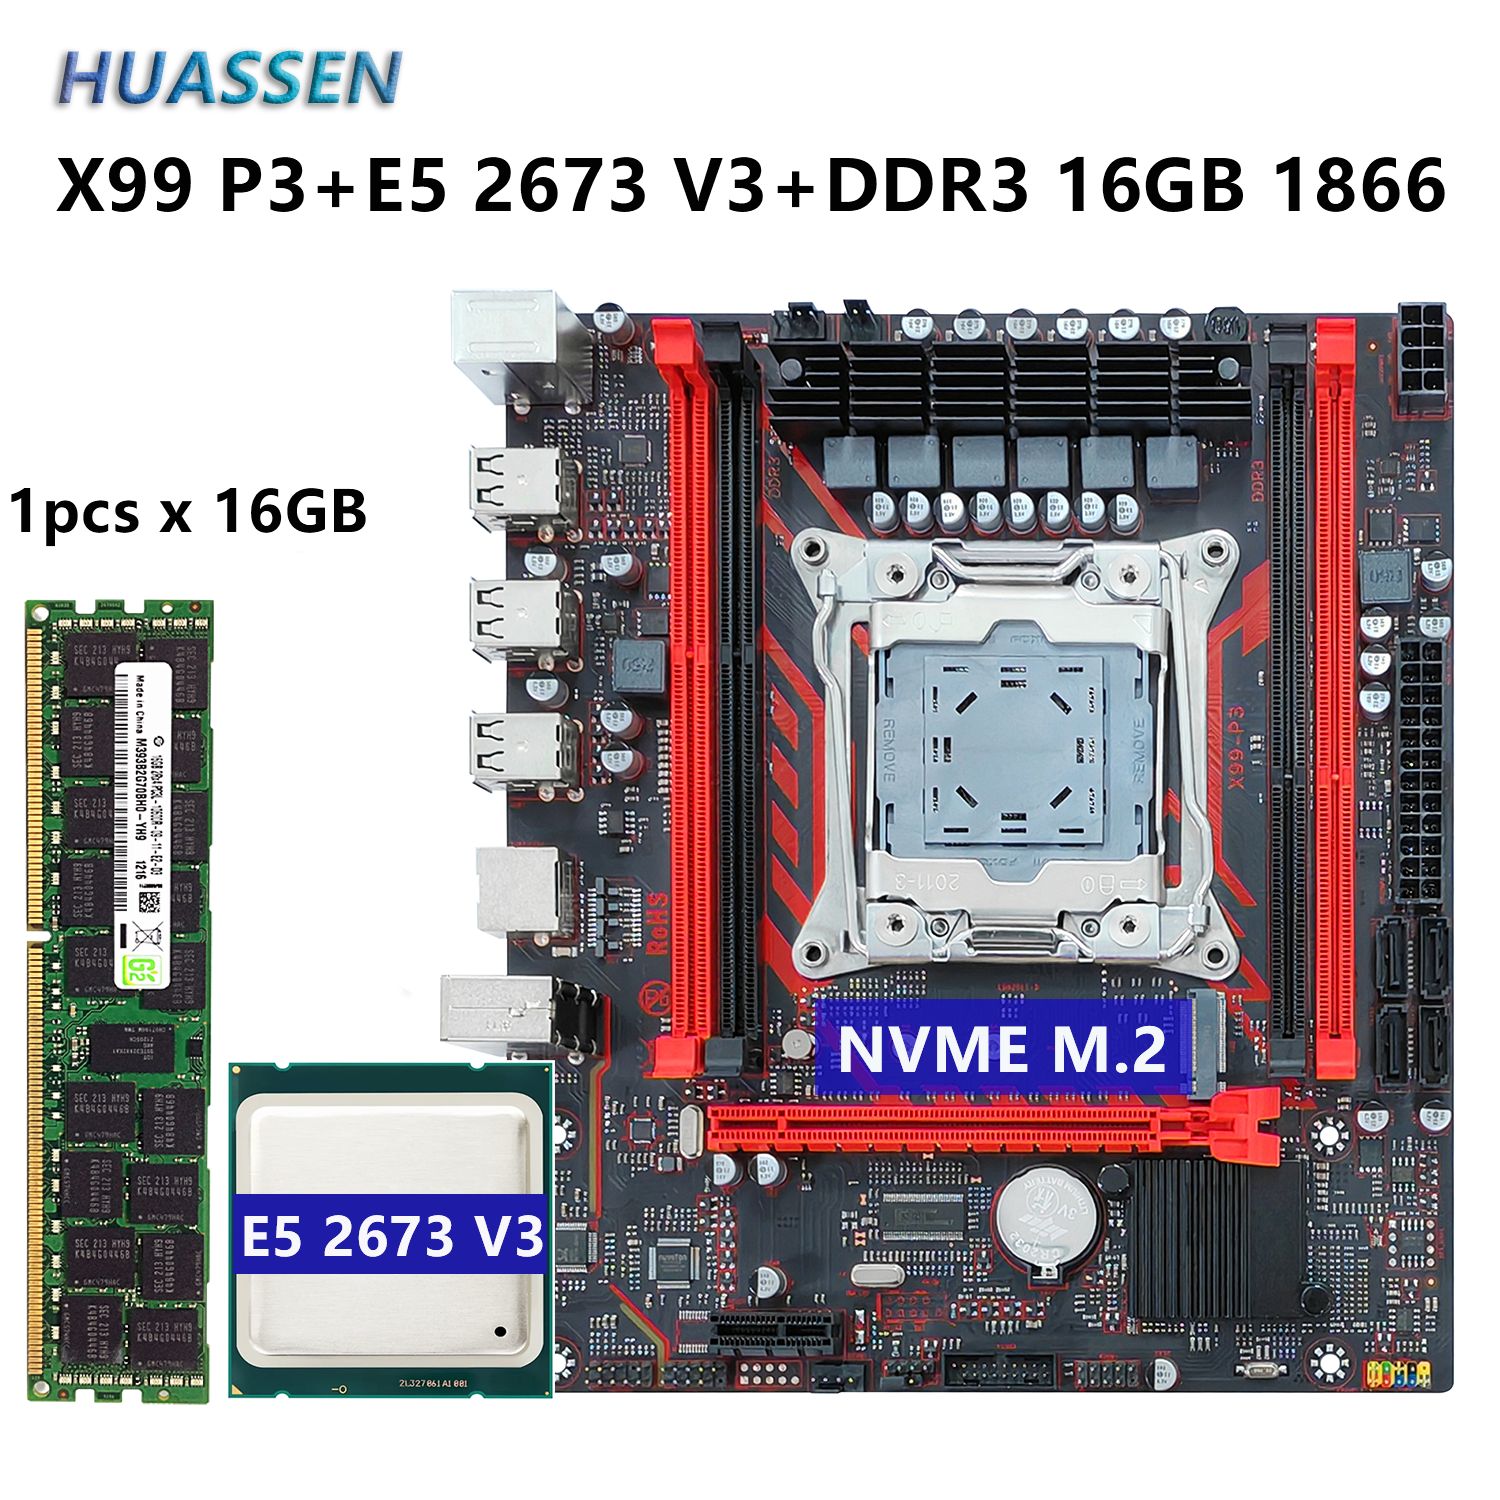 HUASSENМатеринскаяплатаX99P3материнскаяплата+XeonE52673V3CPU2,4ГГц(12ядер/24потока)+16G(1x16G)DDR3REGECC1866MHzПамятьNVMEM.2